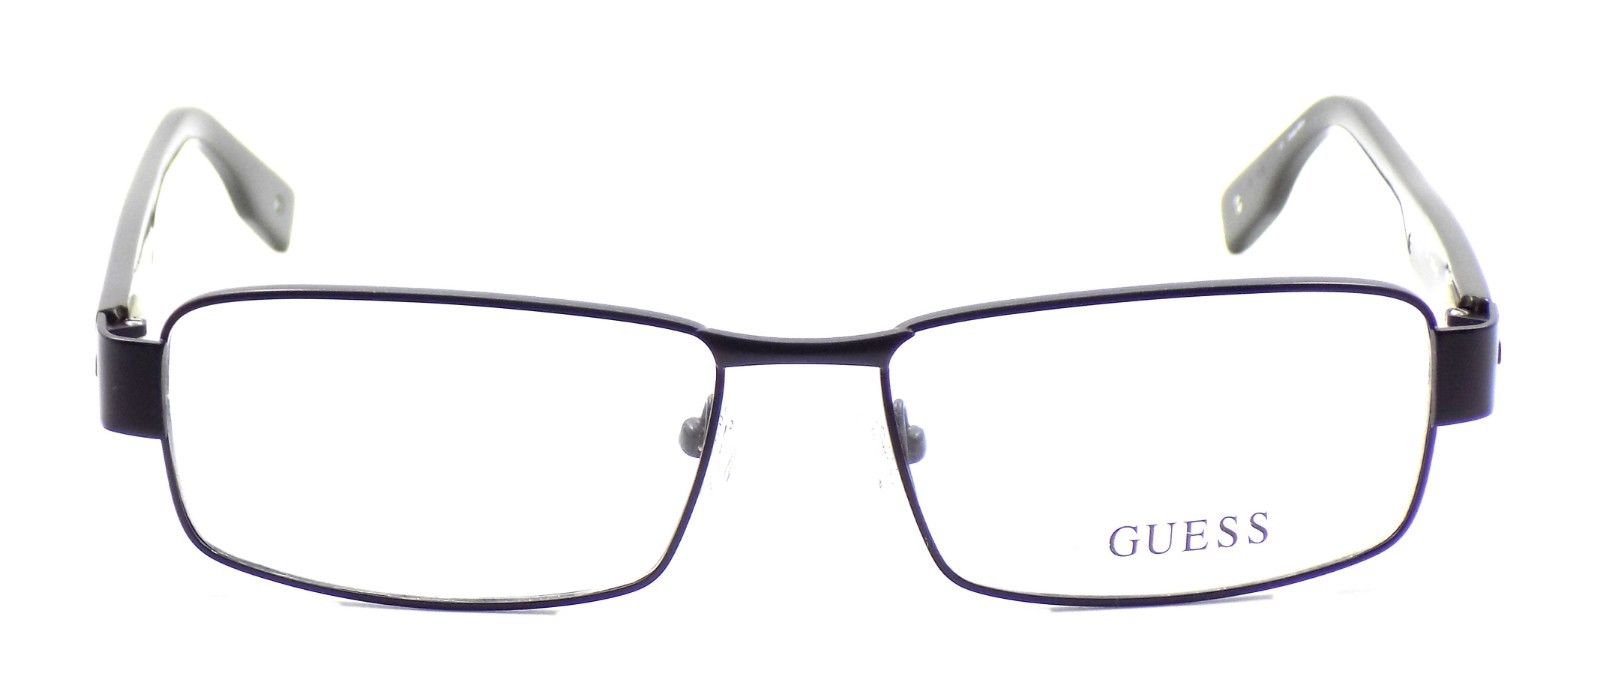 2-GUESS GU1819 BLK Men's Eyeglasses Frames 55-16-145 Satin Black + CASE-715583980150-IKSpecs